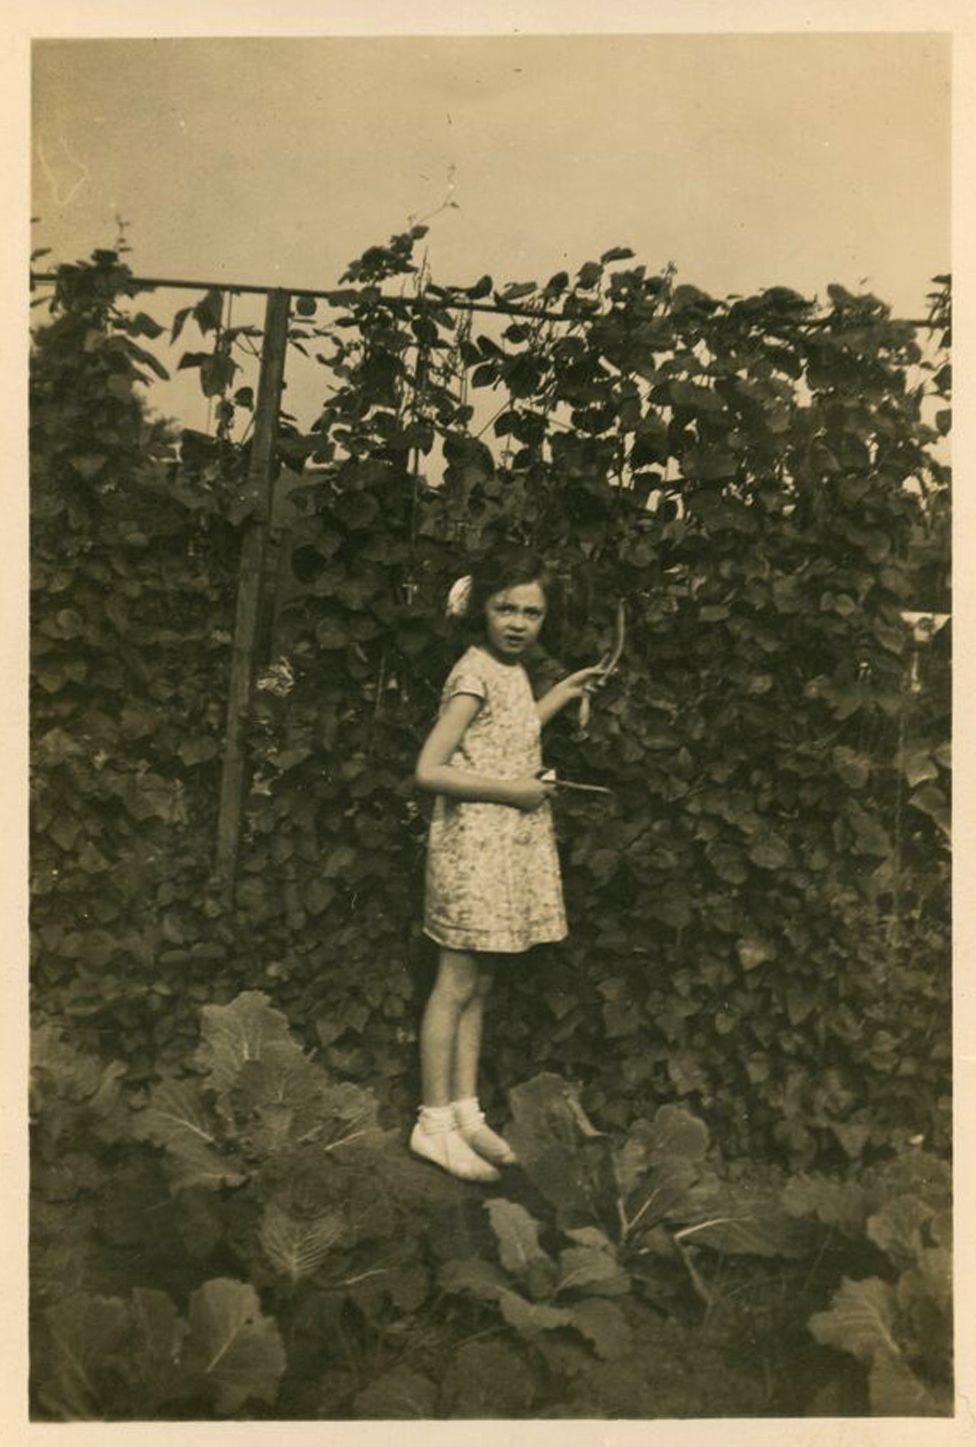 Jean Garner as a child in an allotment